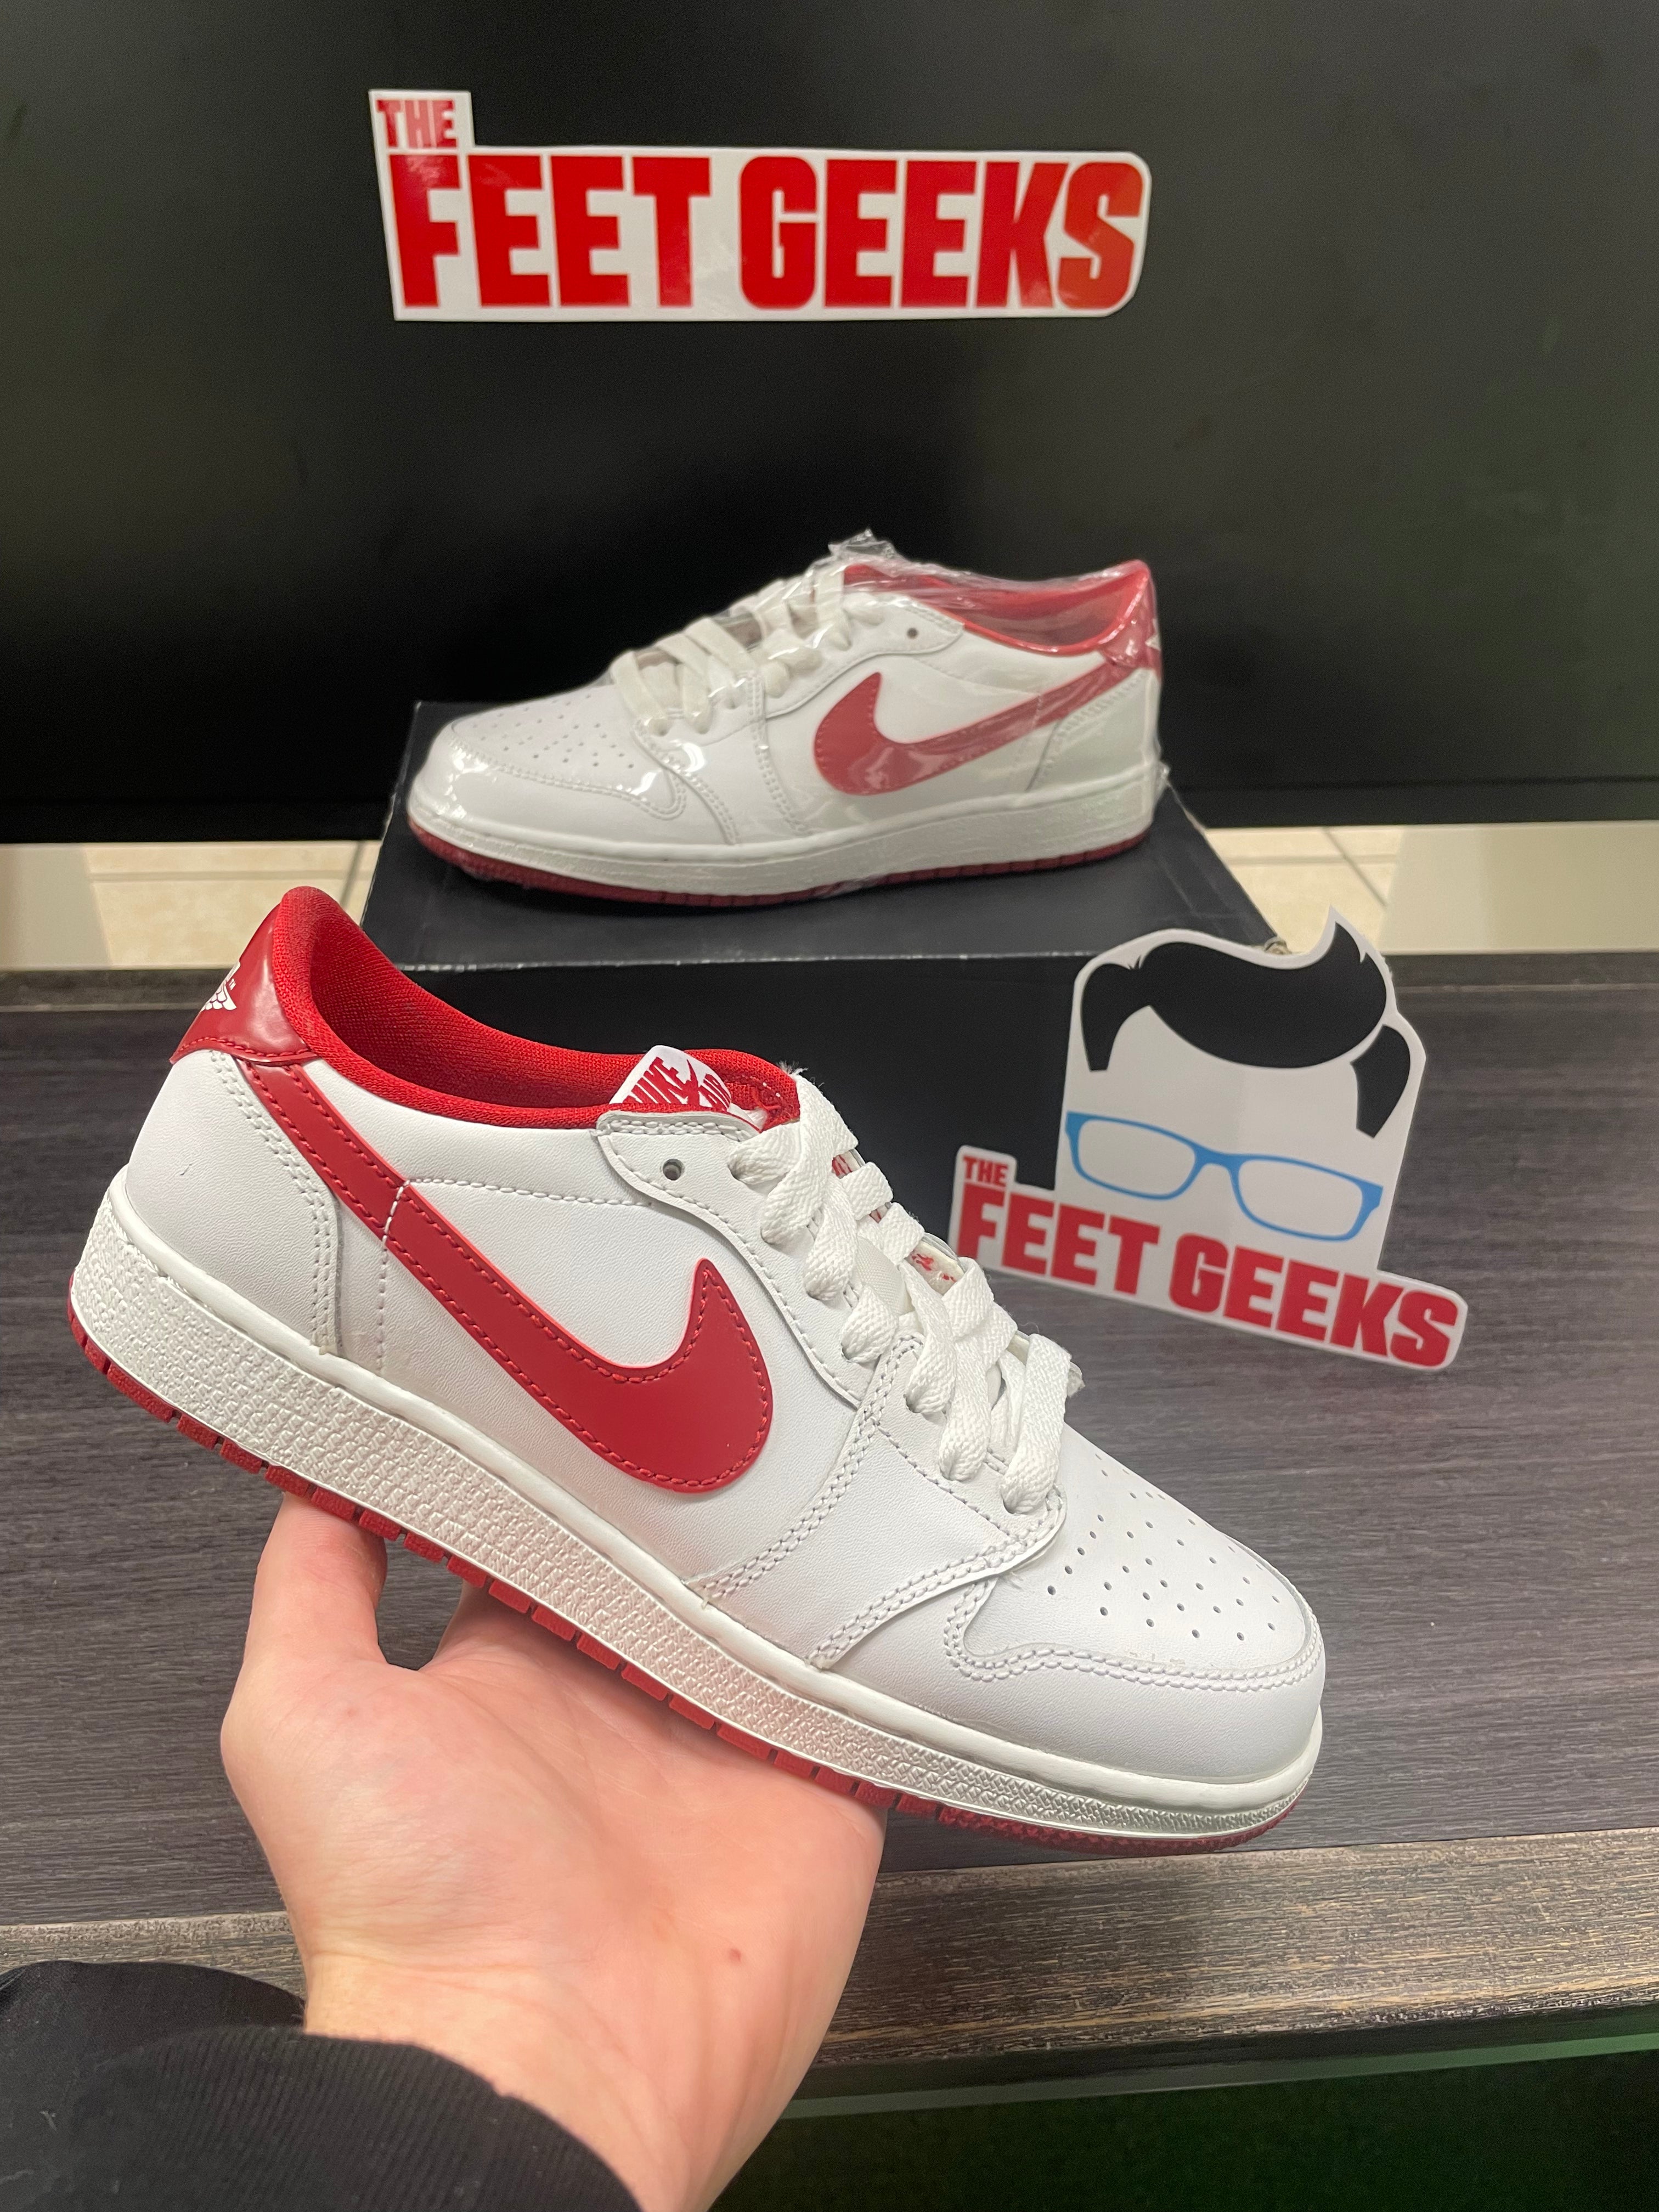 Air Jordan 1 low white/varsity red gs shoe new